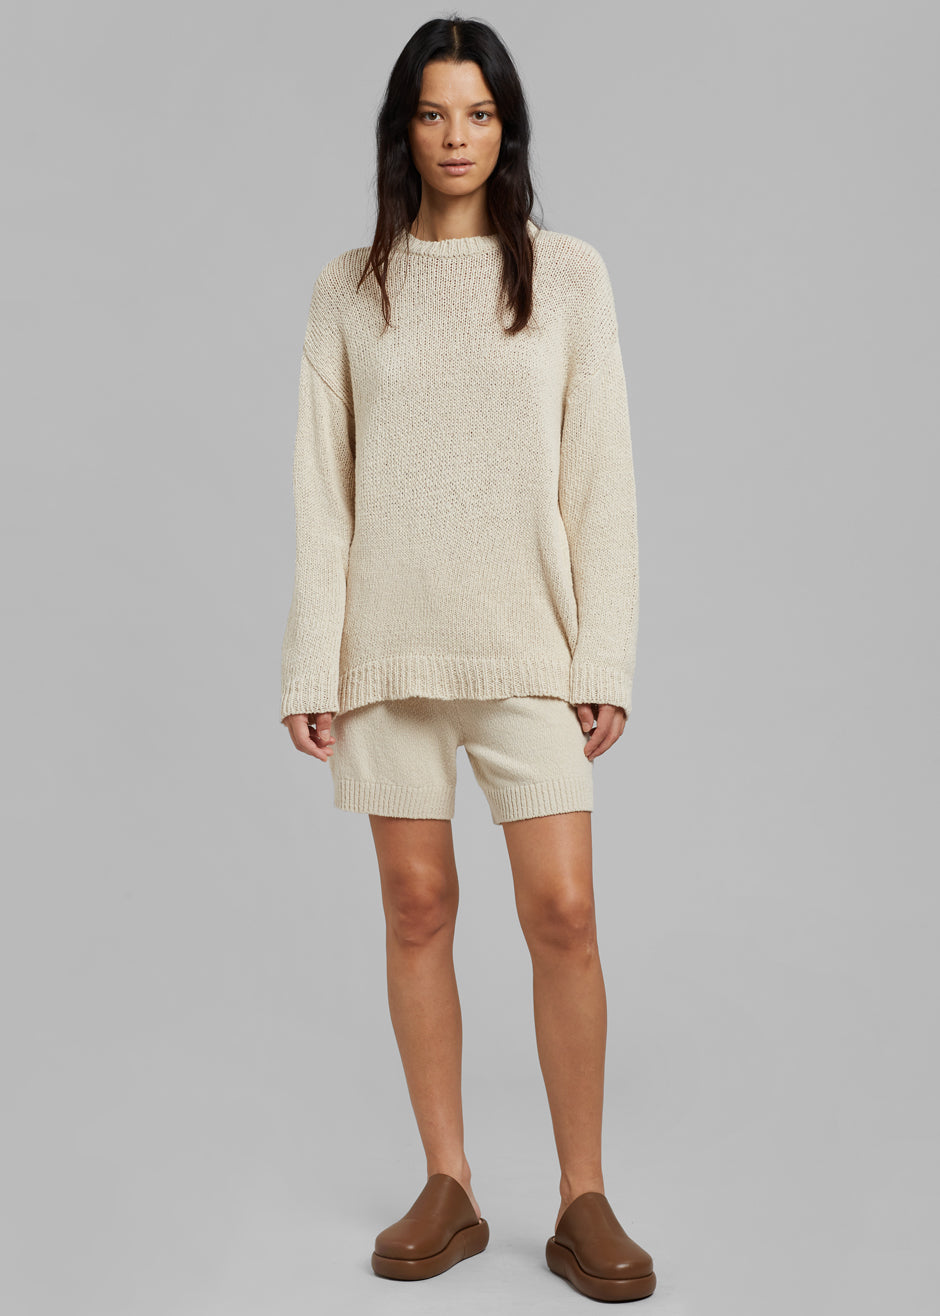 Ode Knit Shorts - Cream - 7